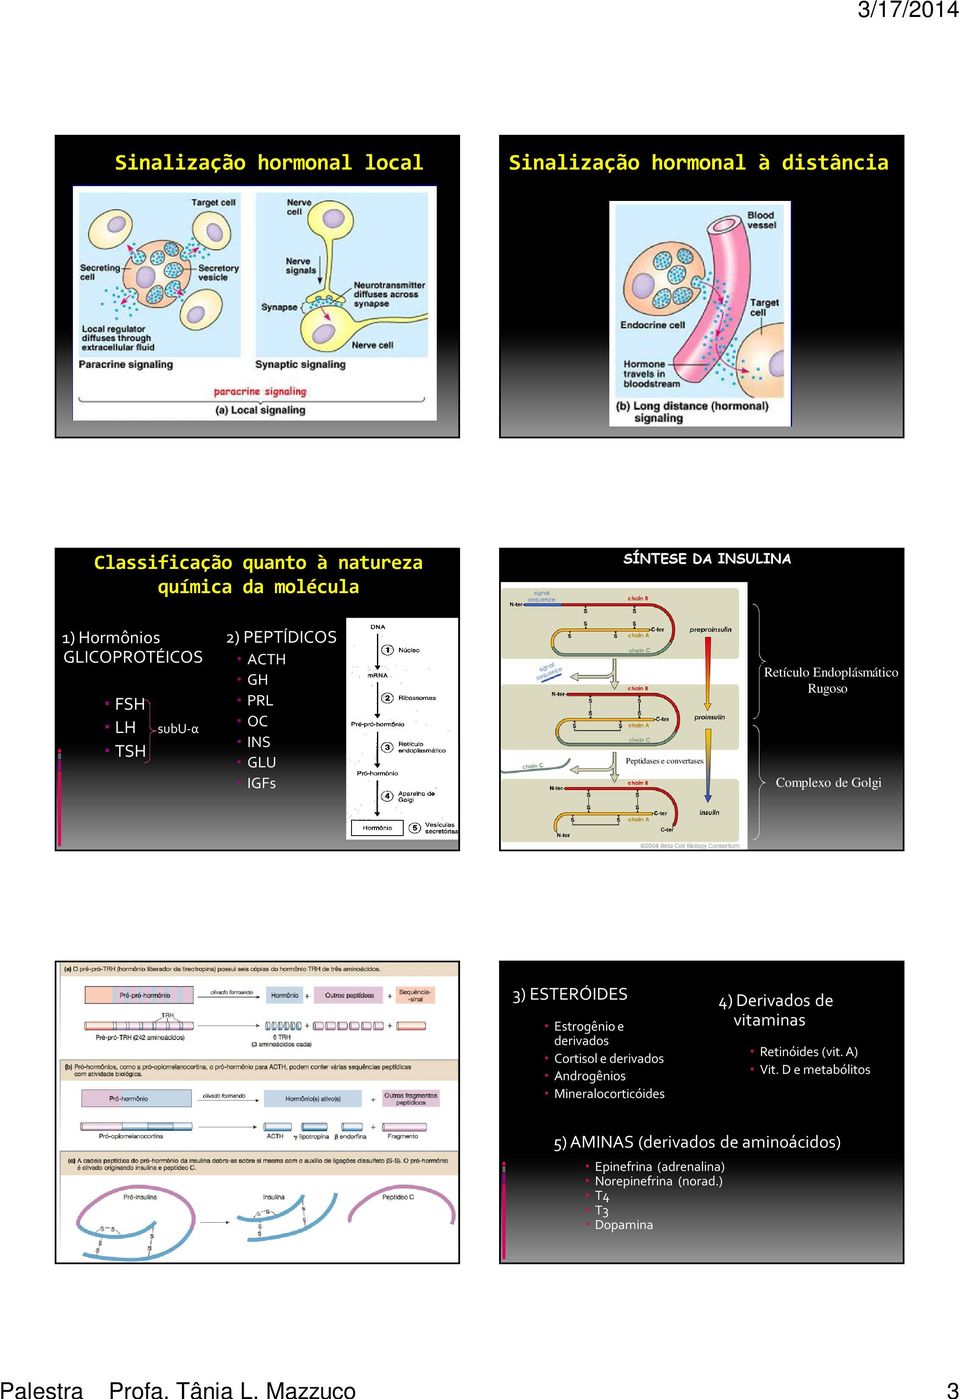 Hormônios GLICOPROTÉICO FH LH subu-α TH 2) PEPTÍDICO ACTH GH PRL OC IN GLU IGFs Peptidases e convertases Retículo Endoplásmático Rugoso